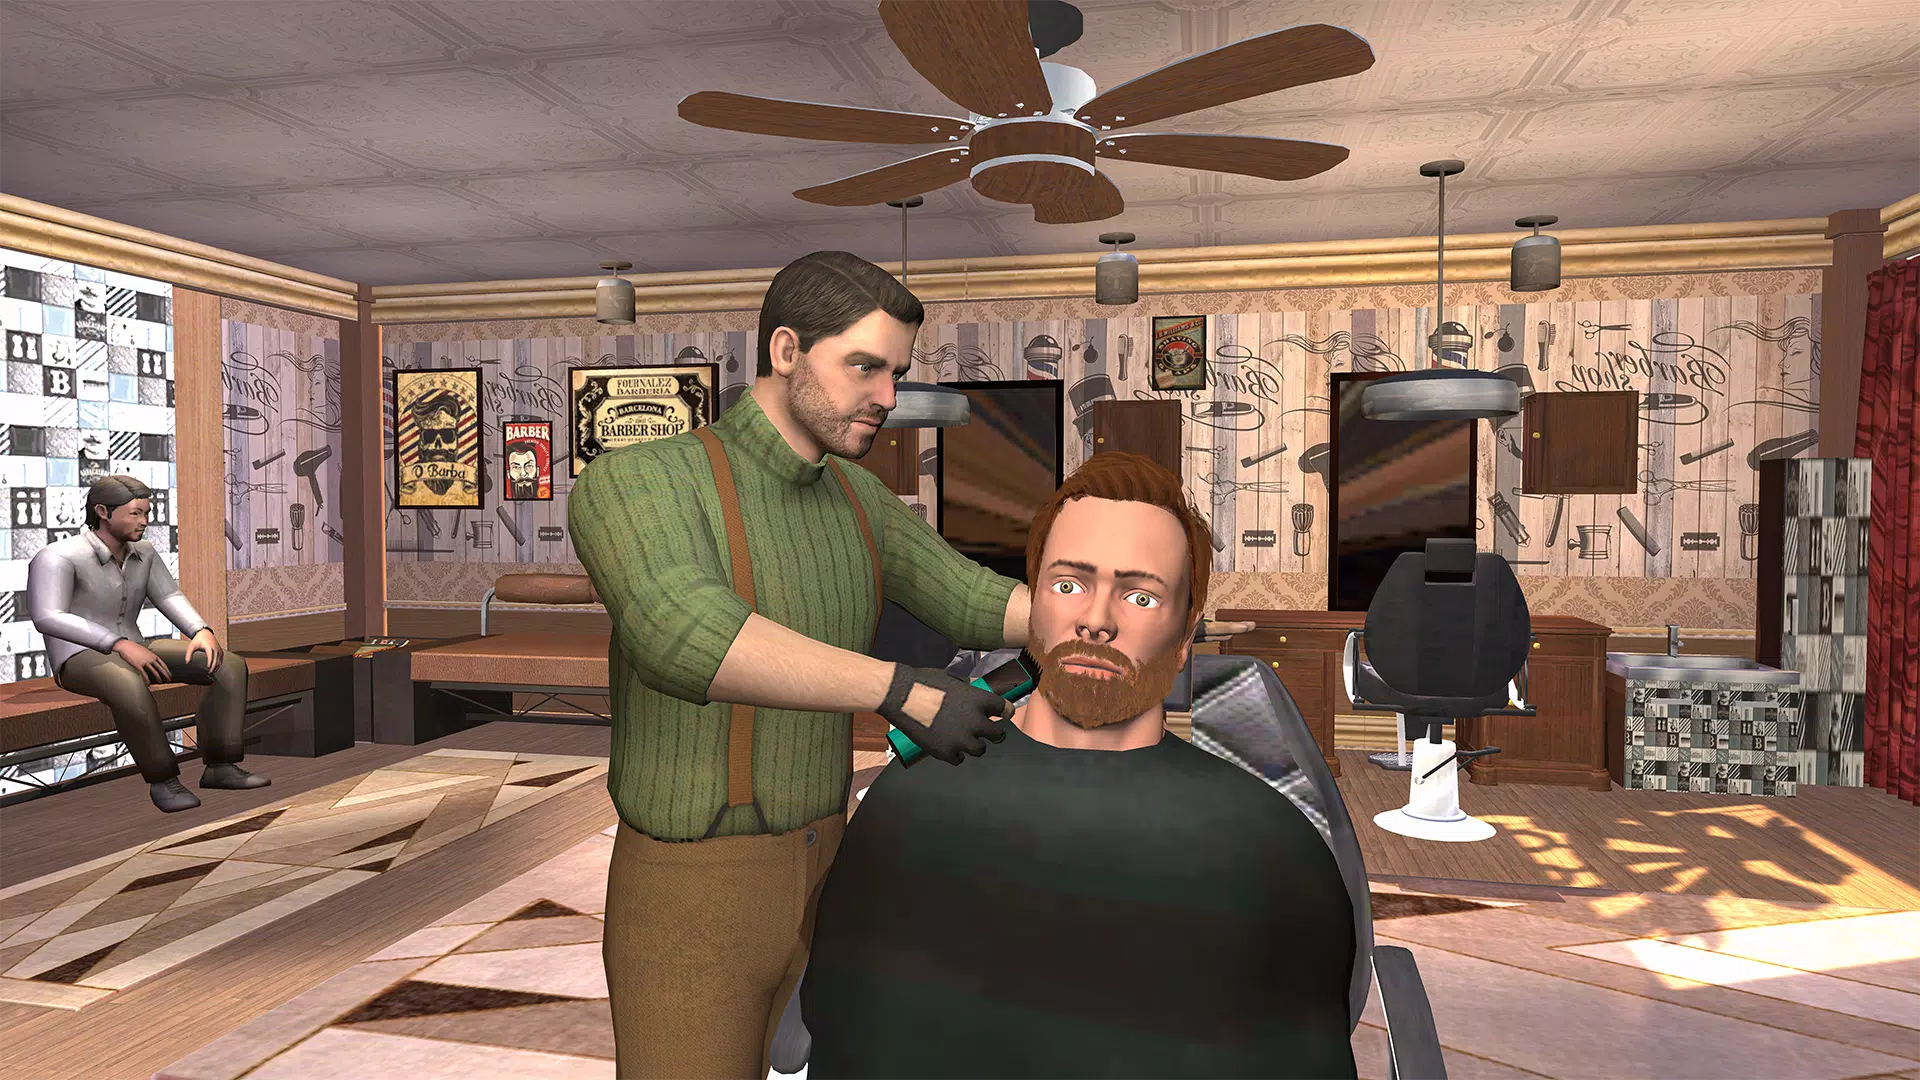 Barber Shop Hair Cut Sim Games - Apps on Google Play